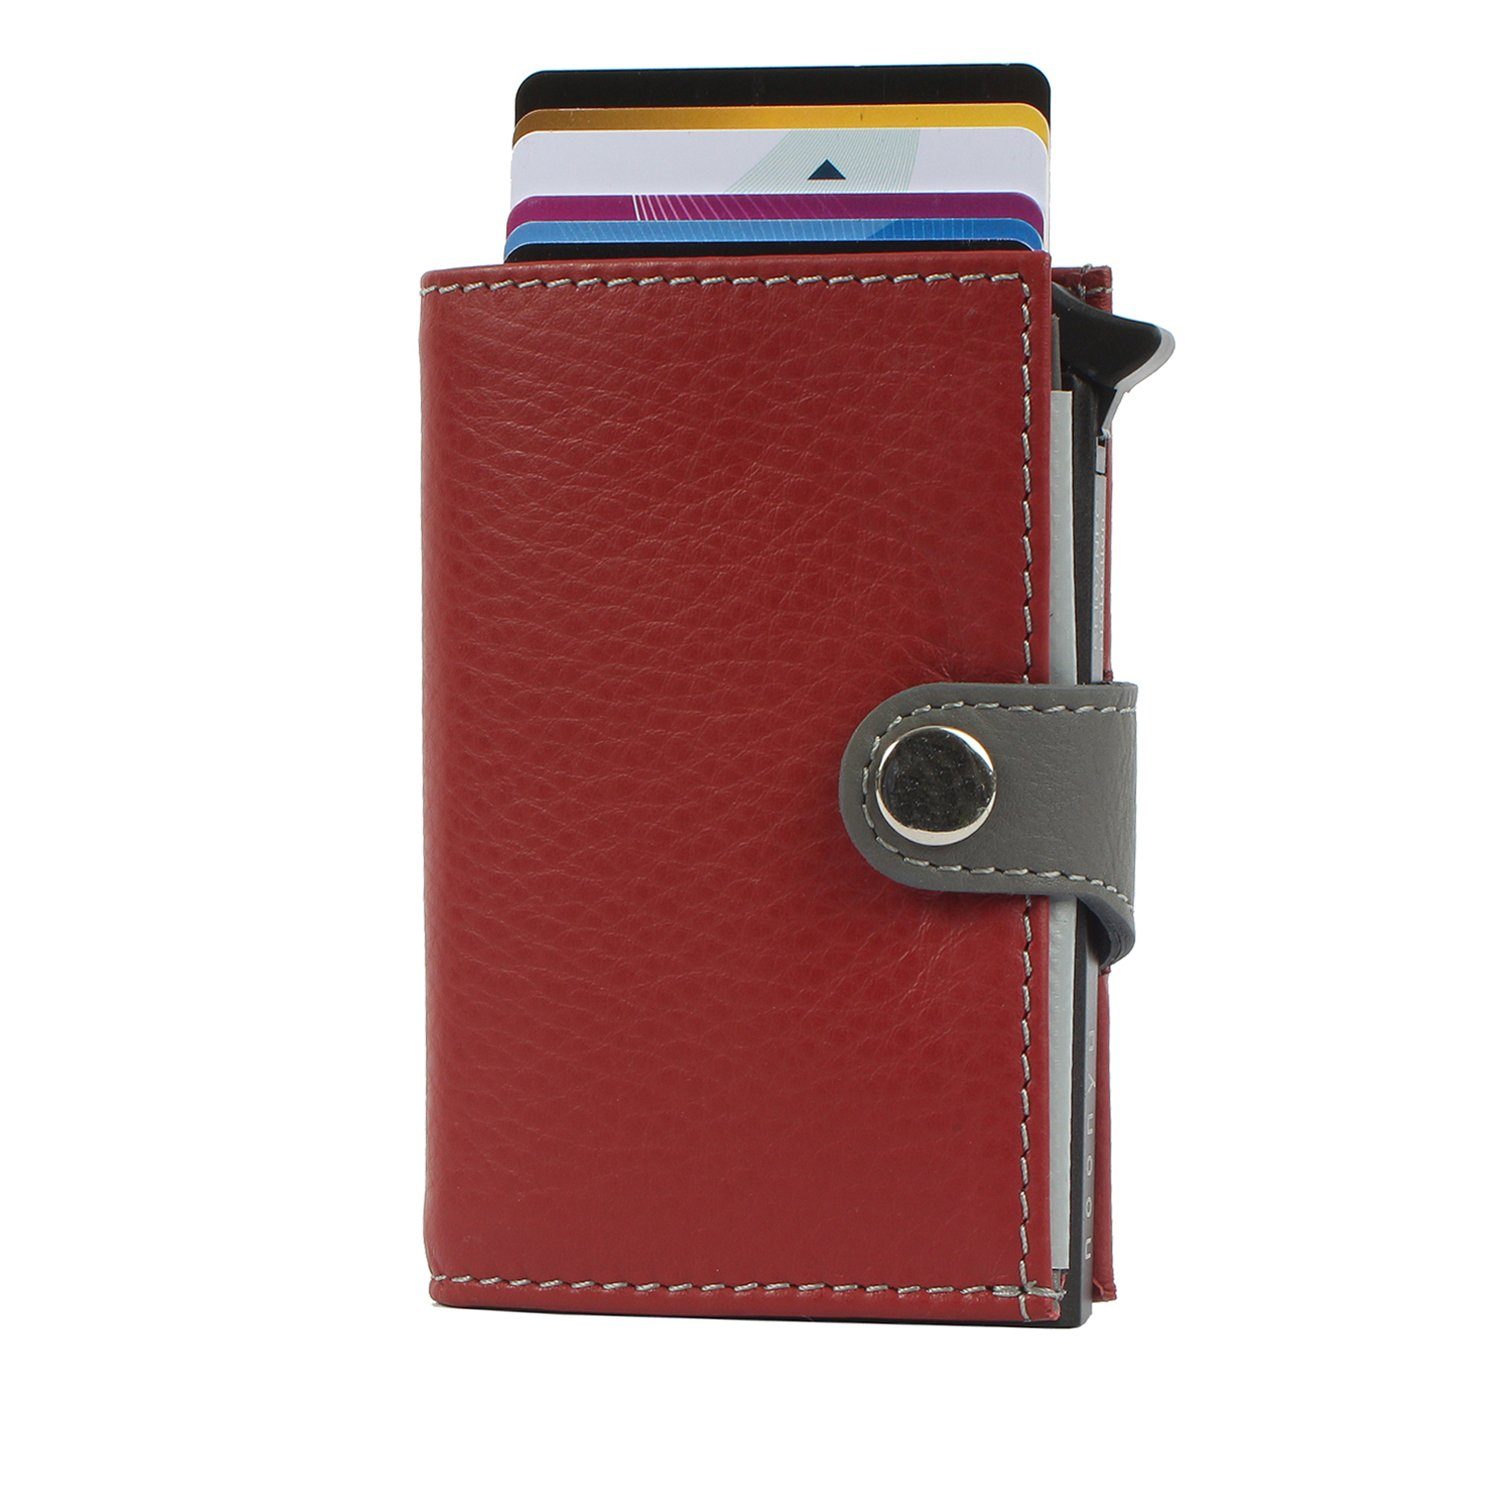 Mini Upcycling noonyu Leder leather, Margelisch karminrot Geldbörse Kreditkartenbörse single aus